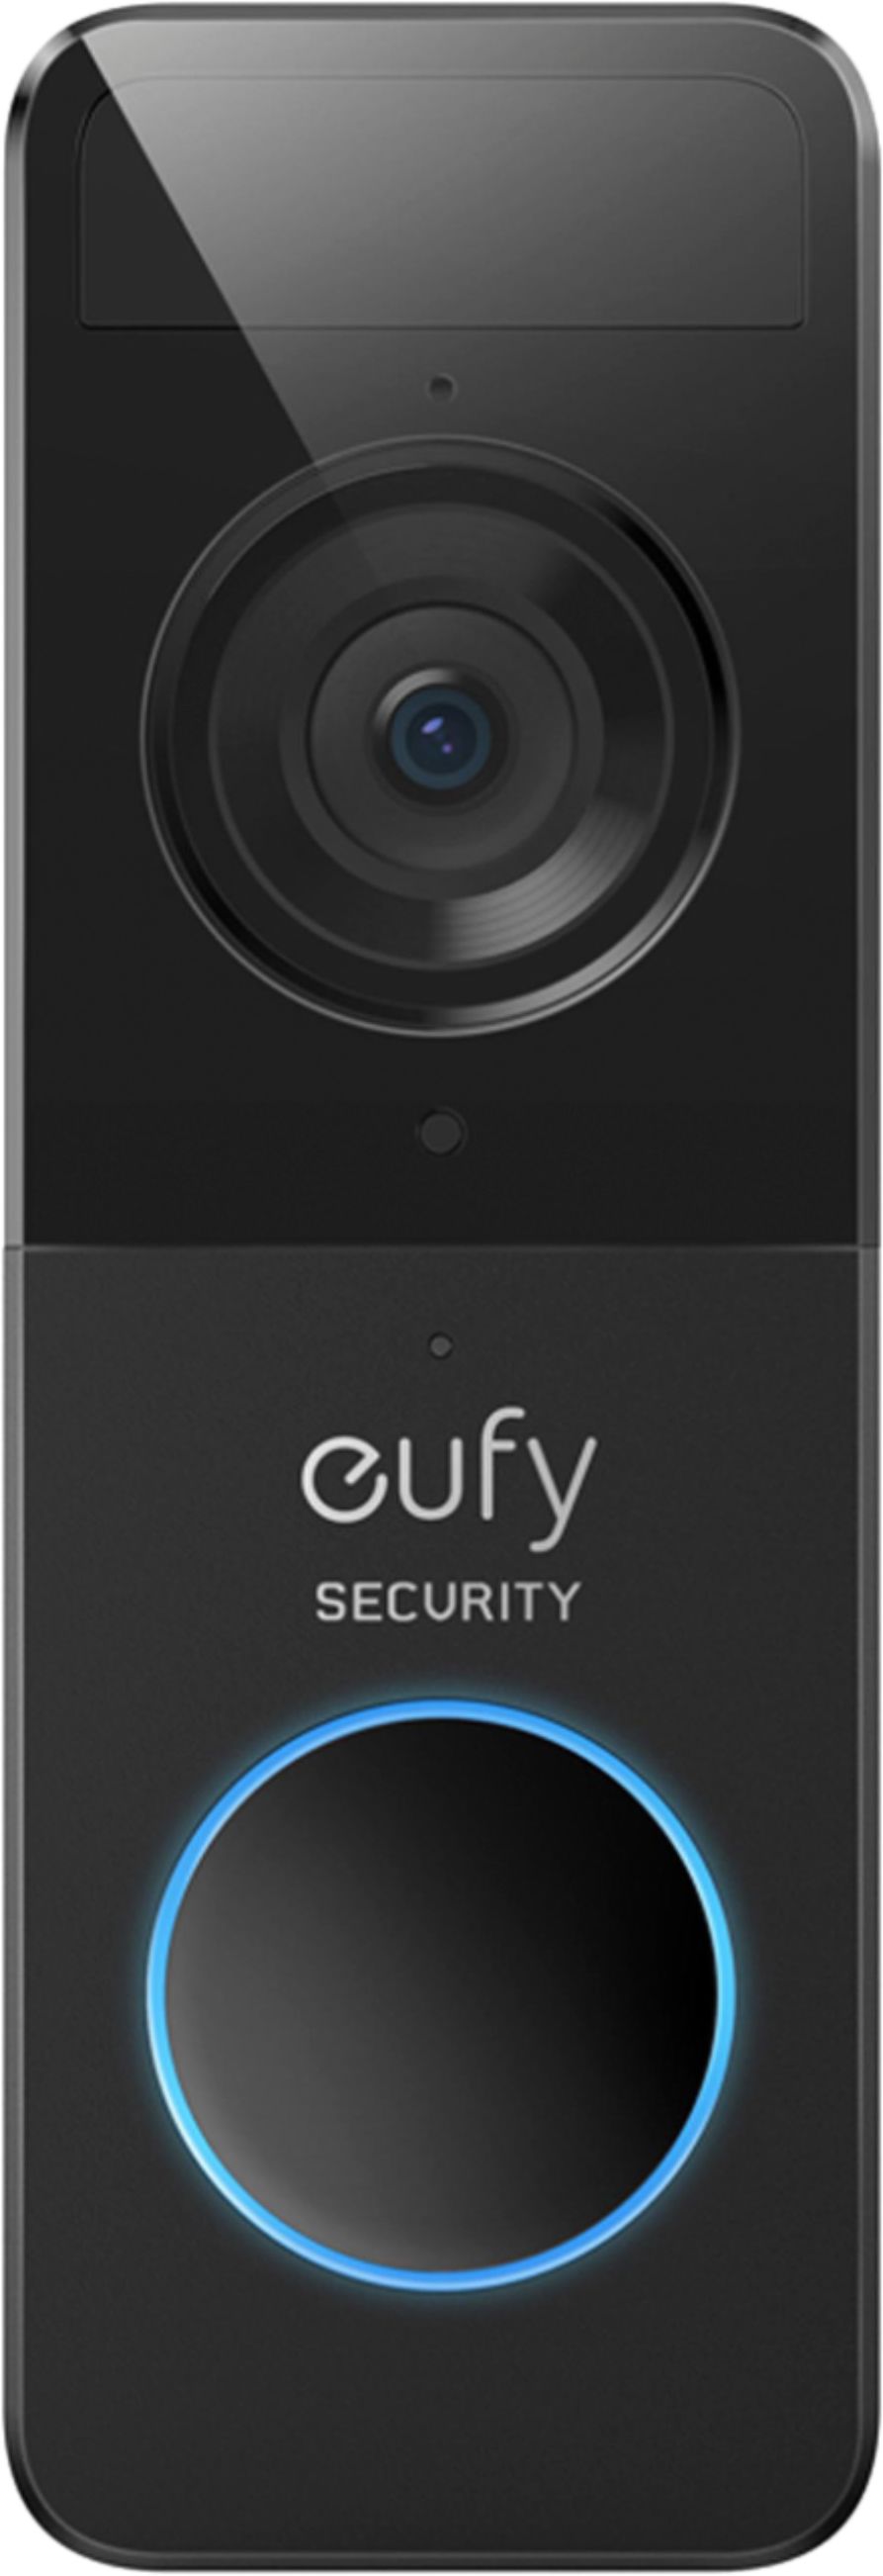 Angle View: eufy 1080p Video Doorbell, Black